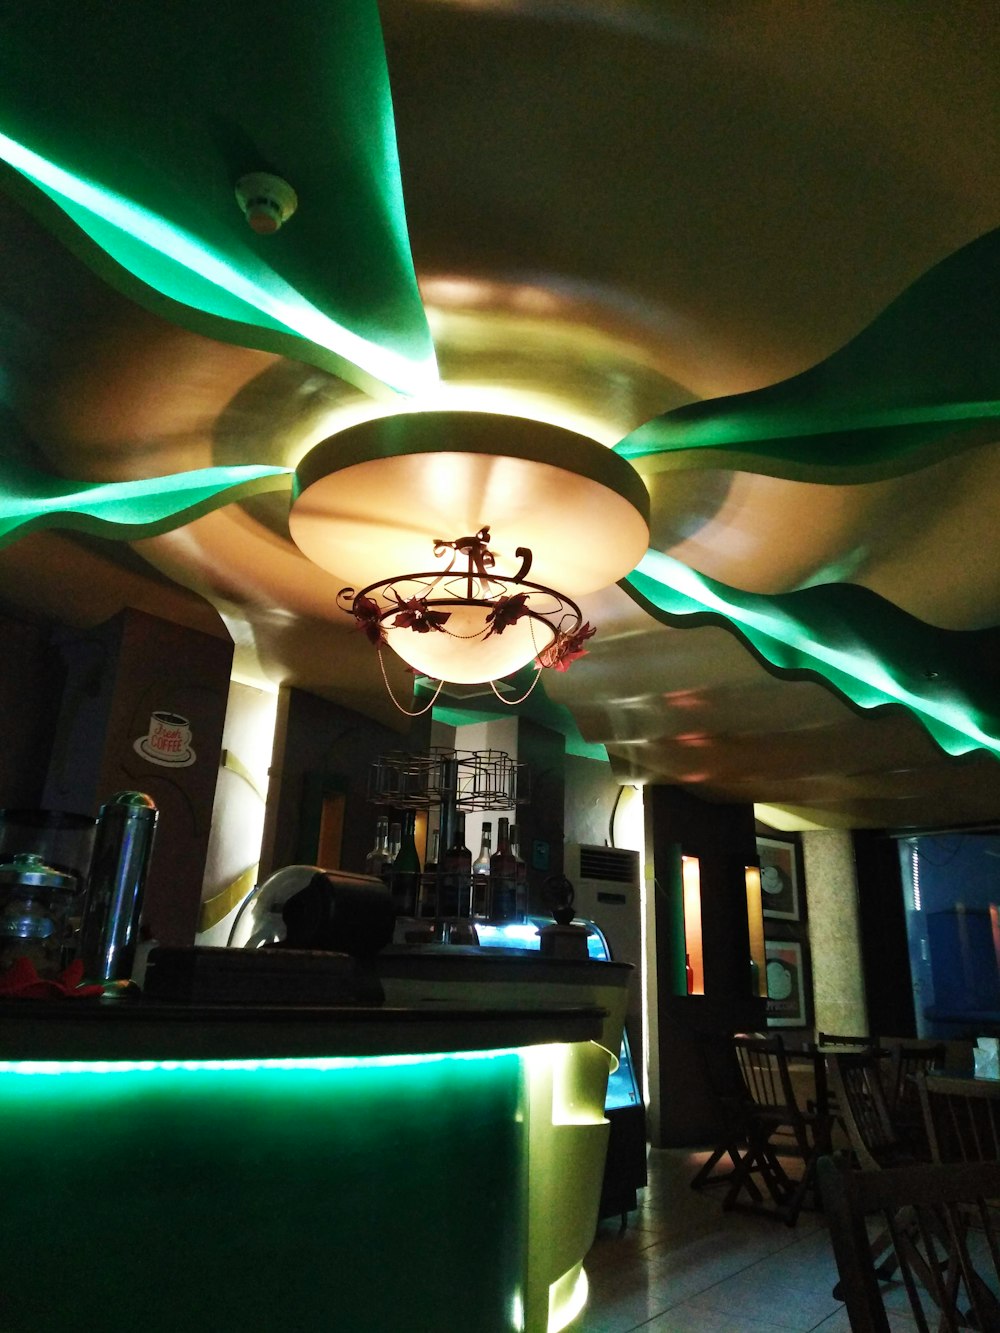 turned-on ceiling light at the restaurant